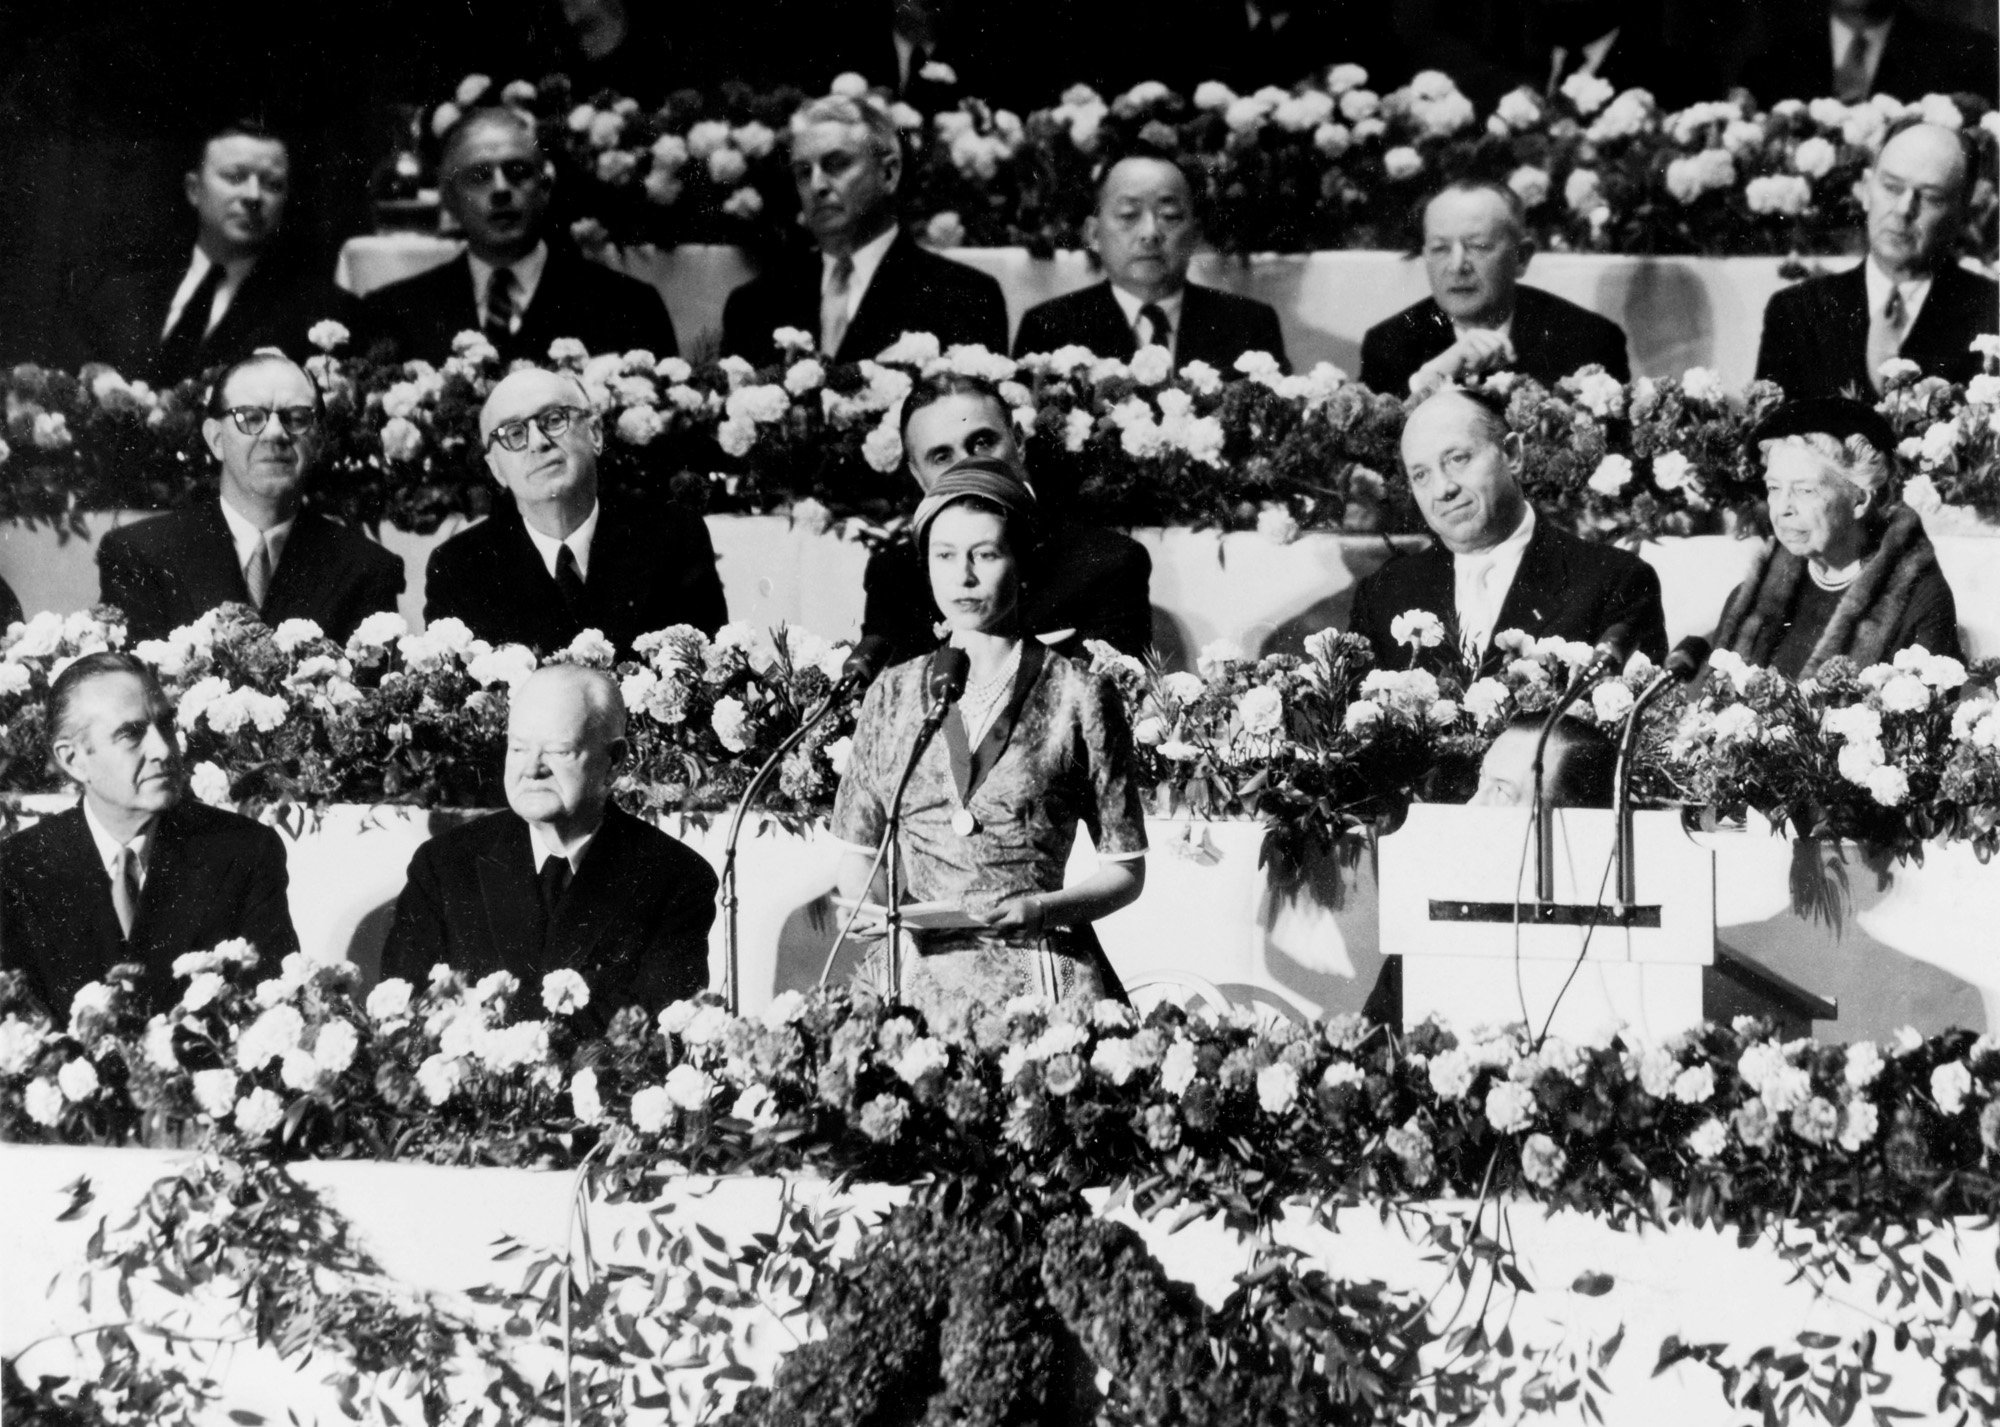 Queen Elizabeth II Addressing A Crowd at the Waldorf Astoria in 1957